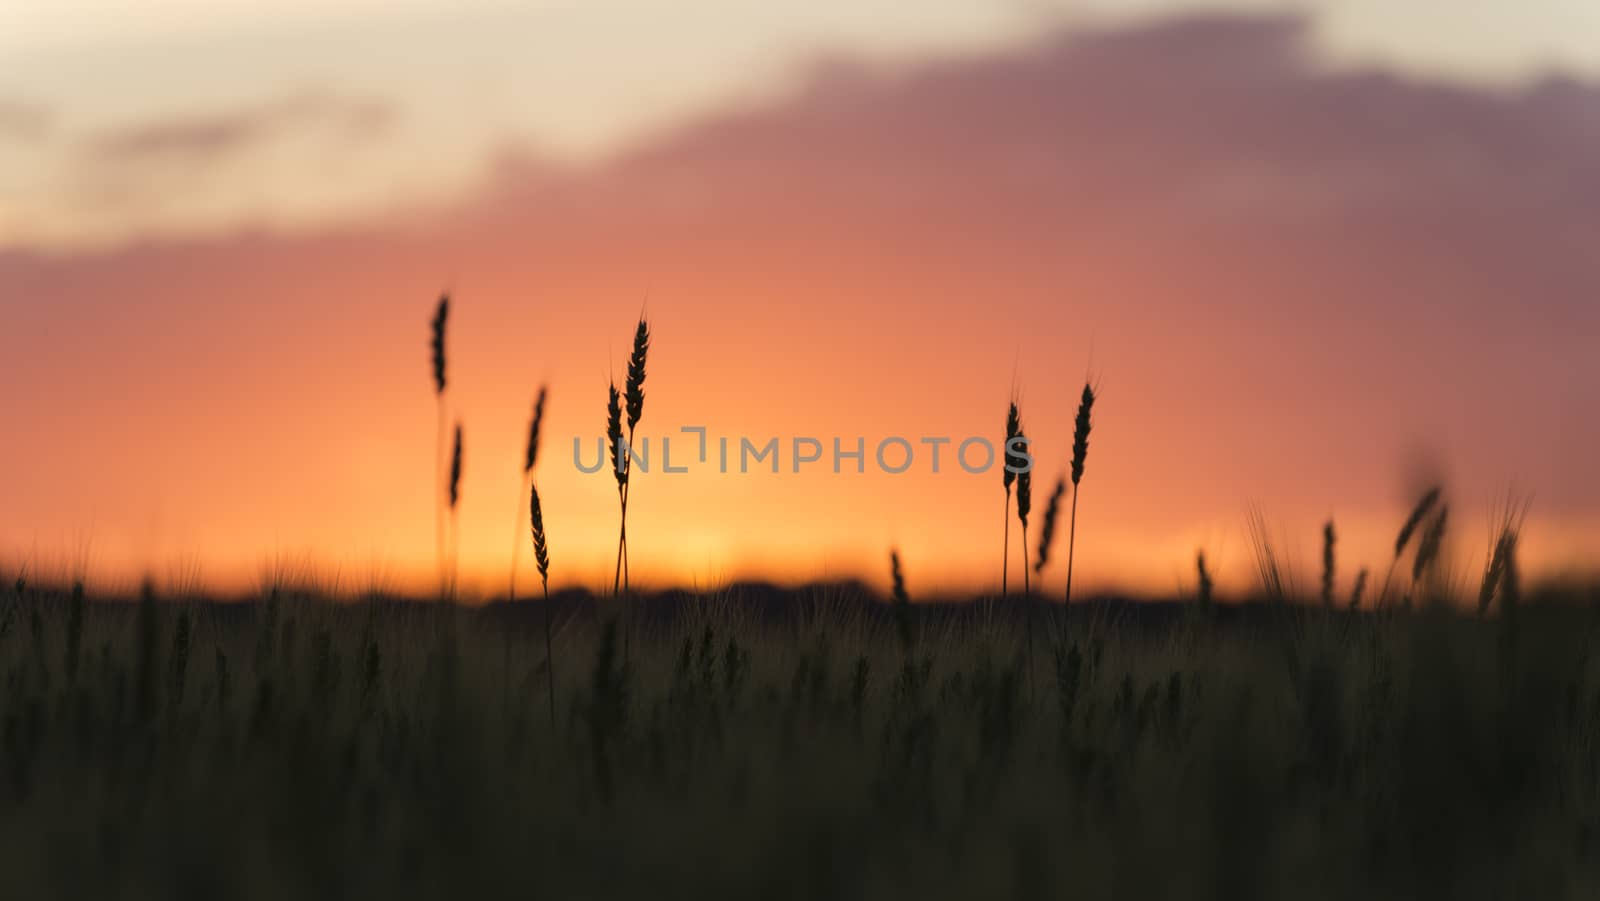 Grain head of wheat, triticum, triticeae plant silhouetted against sunset